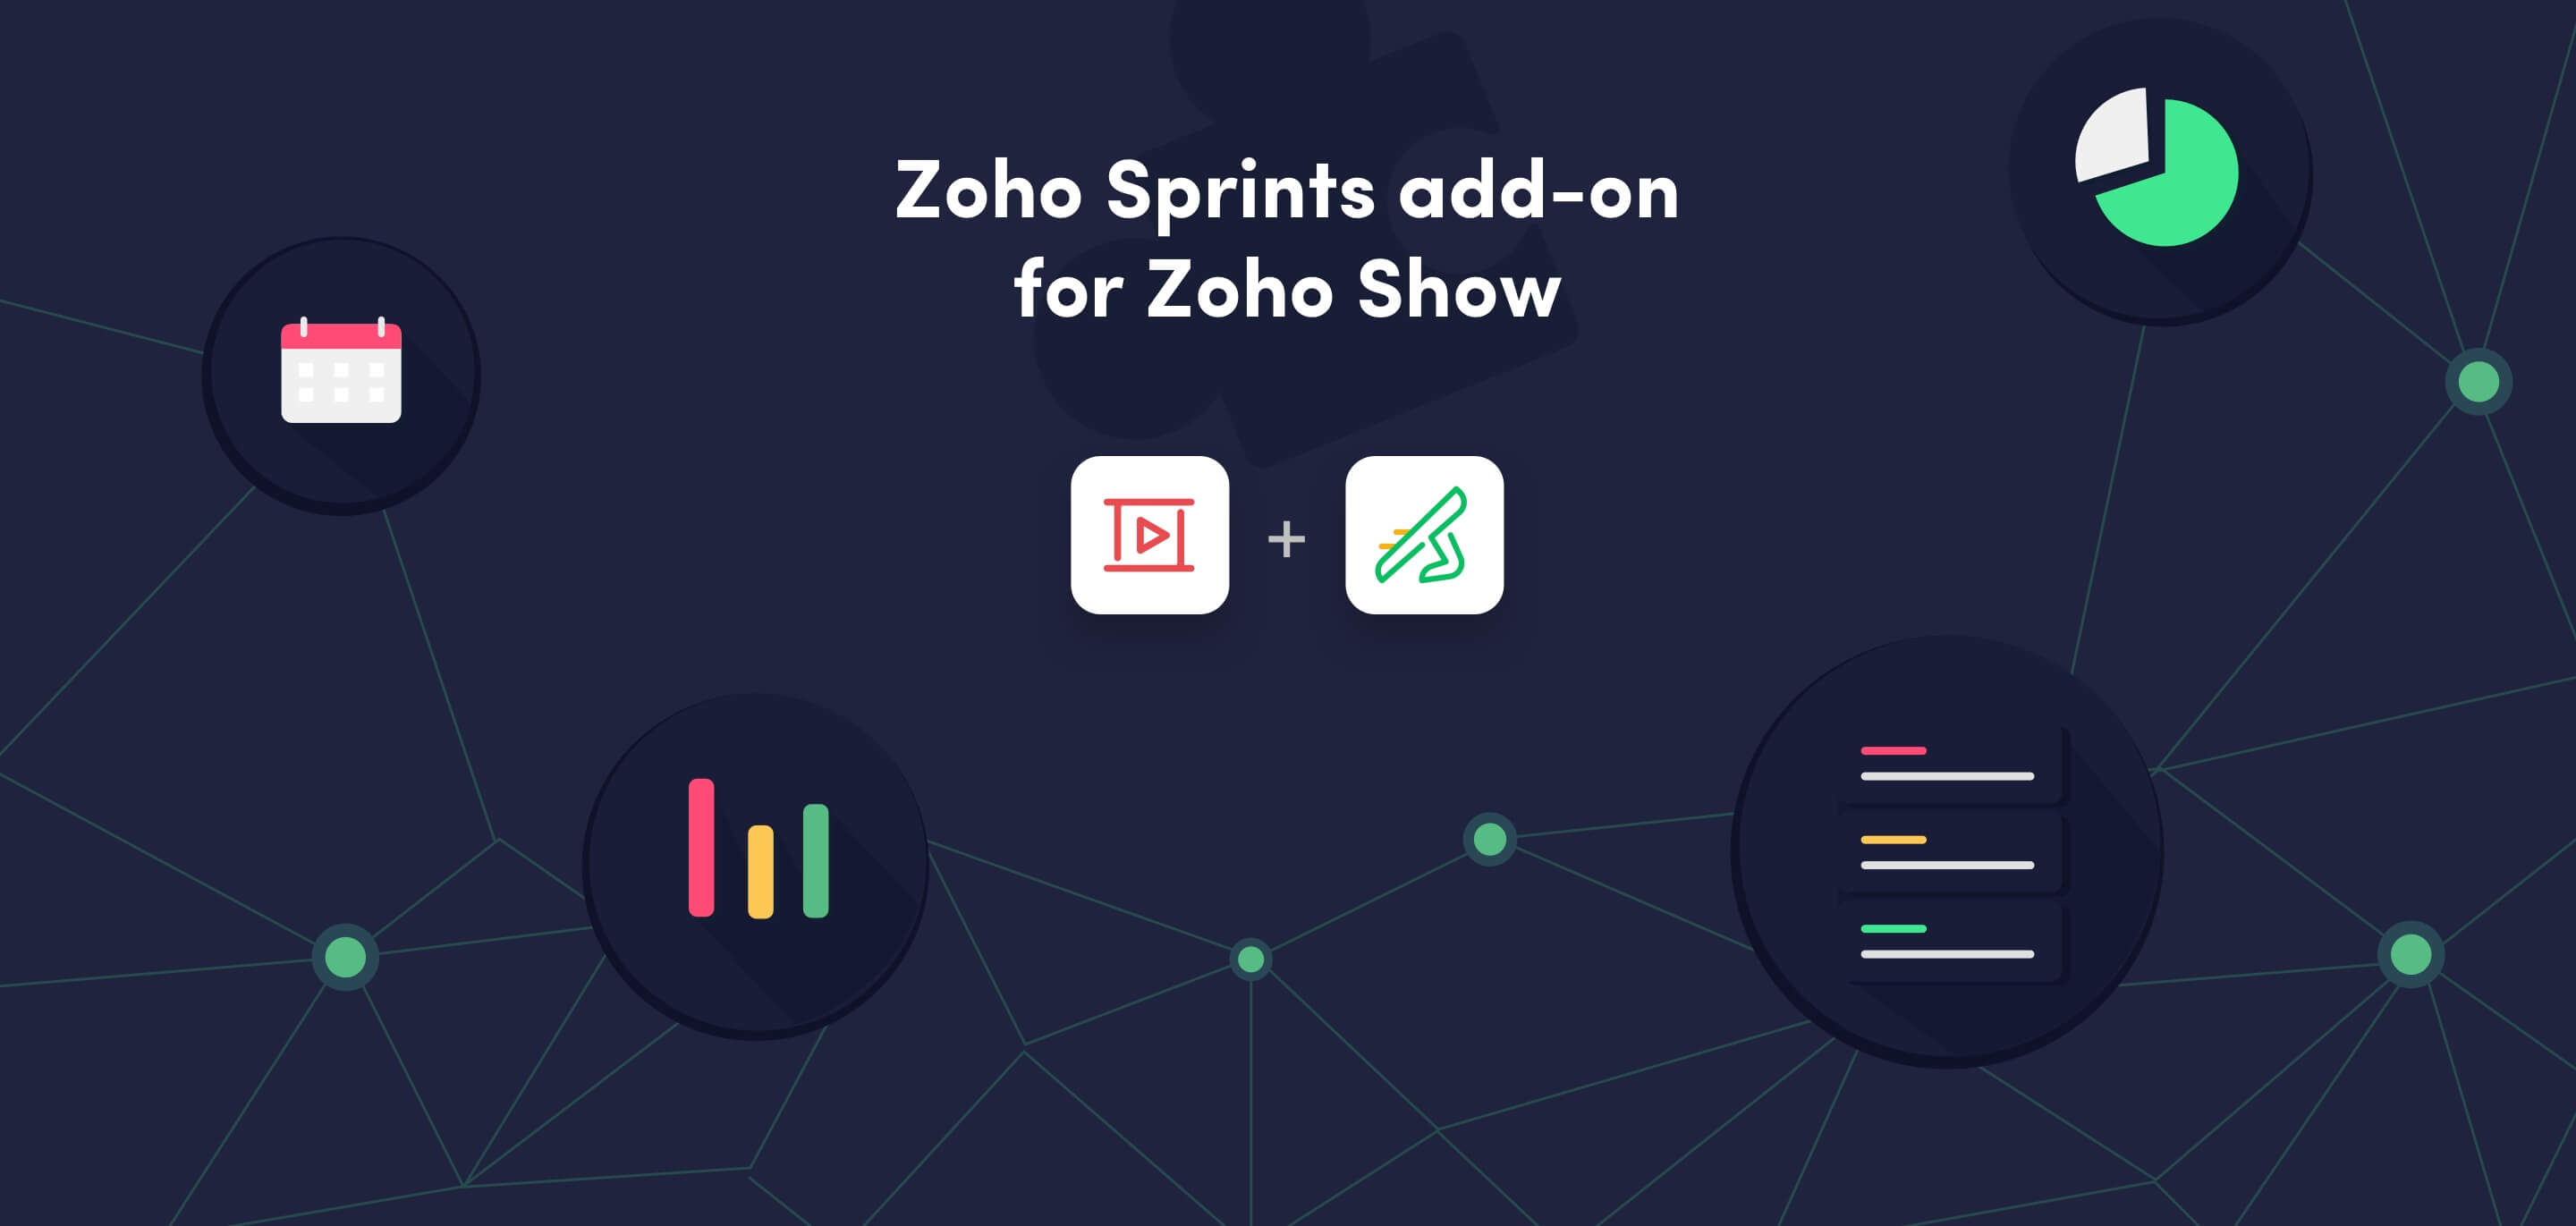 All new Zoho Show